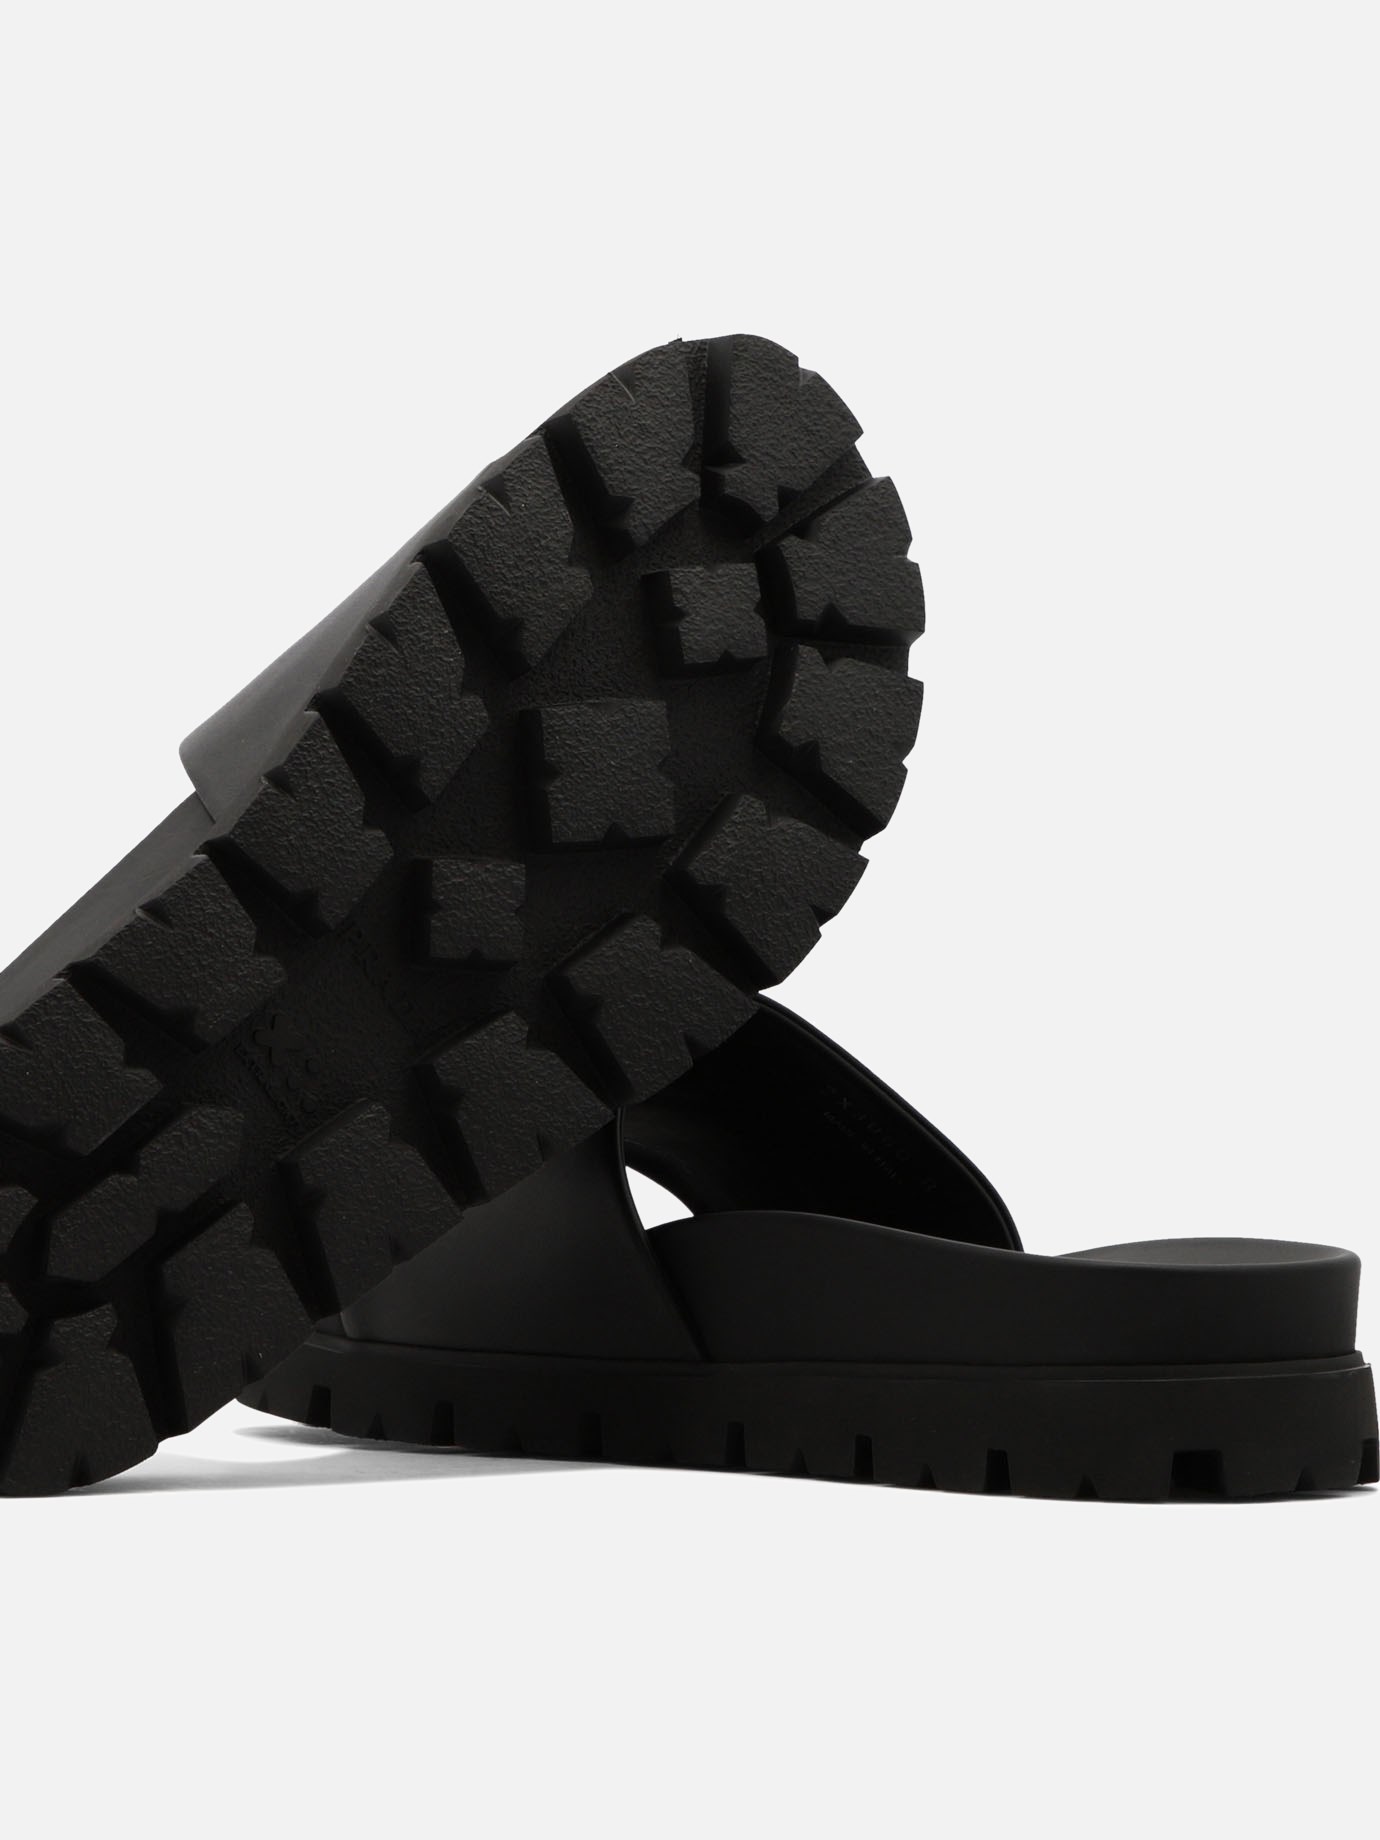 Sandals with logo by Prada